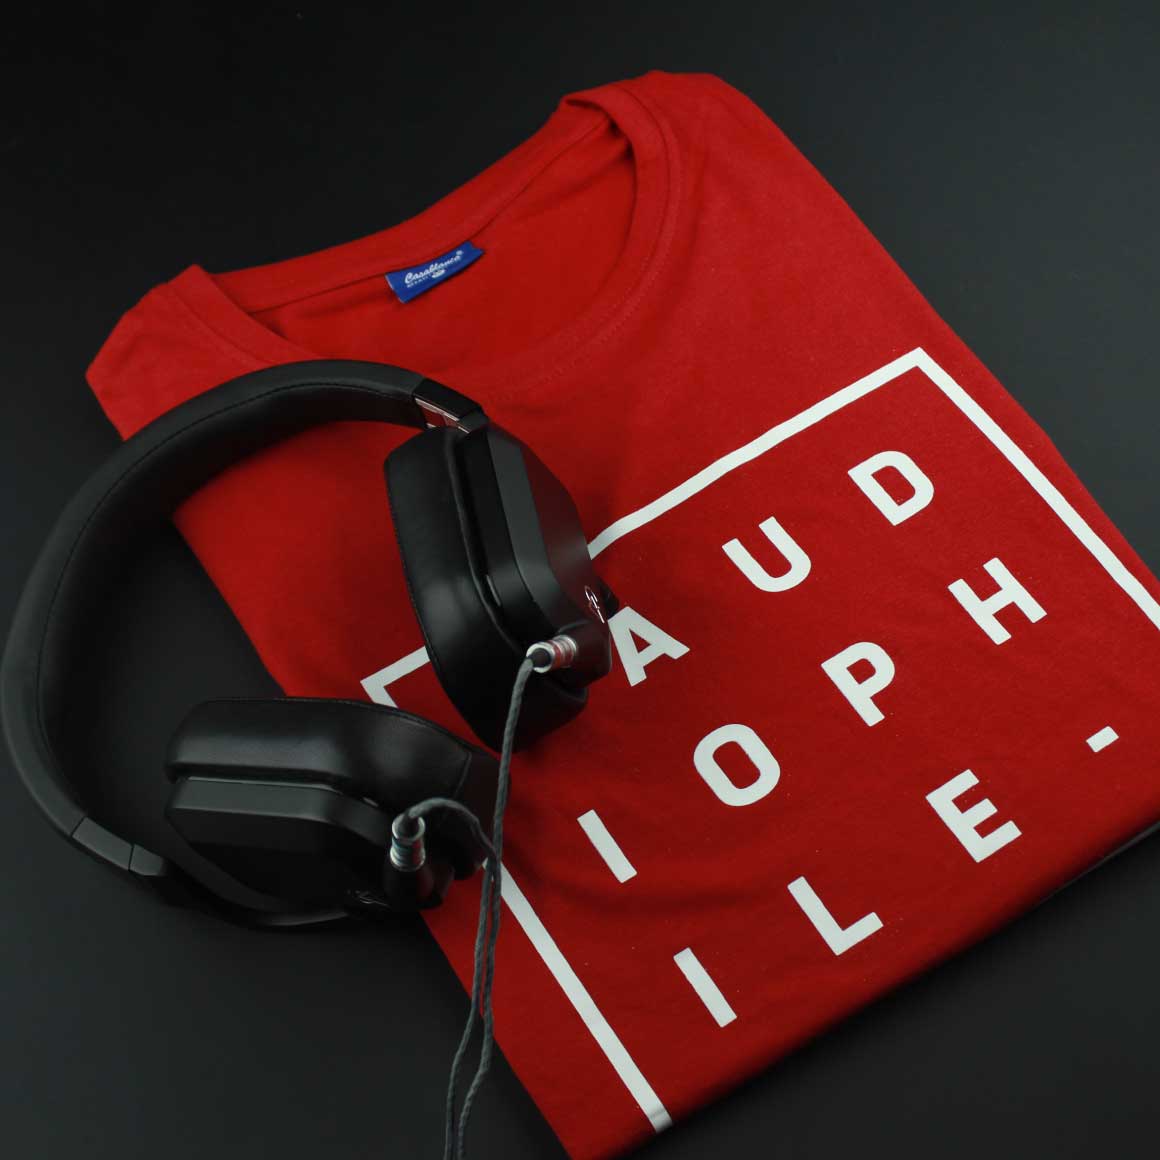 Headphone-Zone-Professed Audiophile T-Shirt